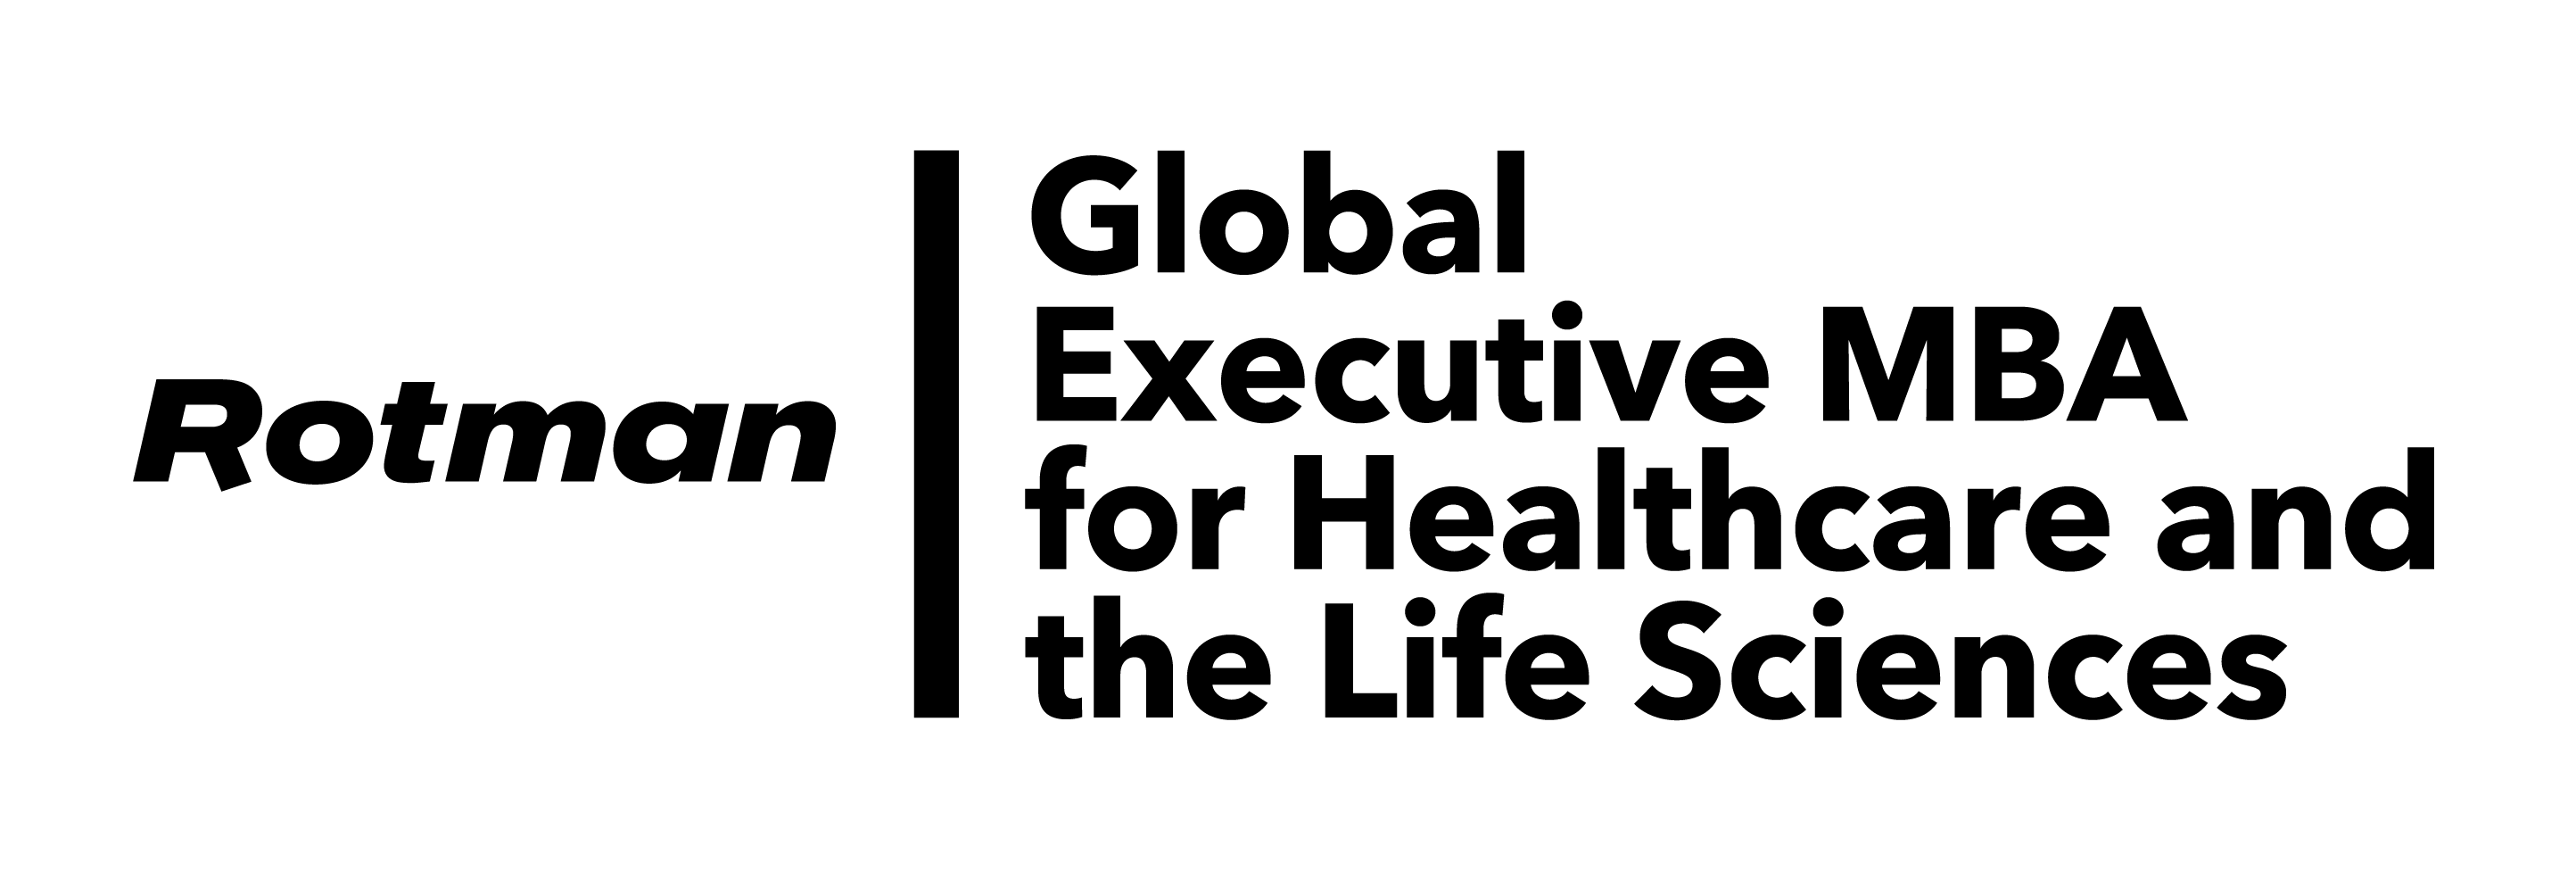 Rotman preferred logo